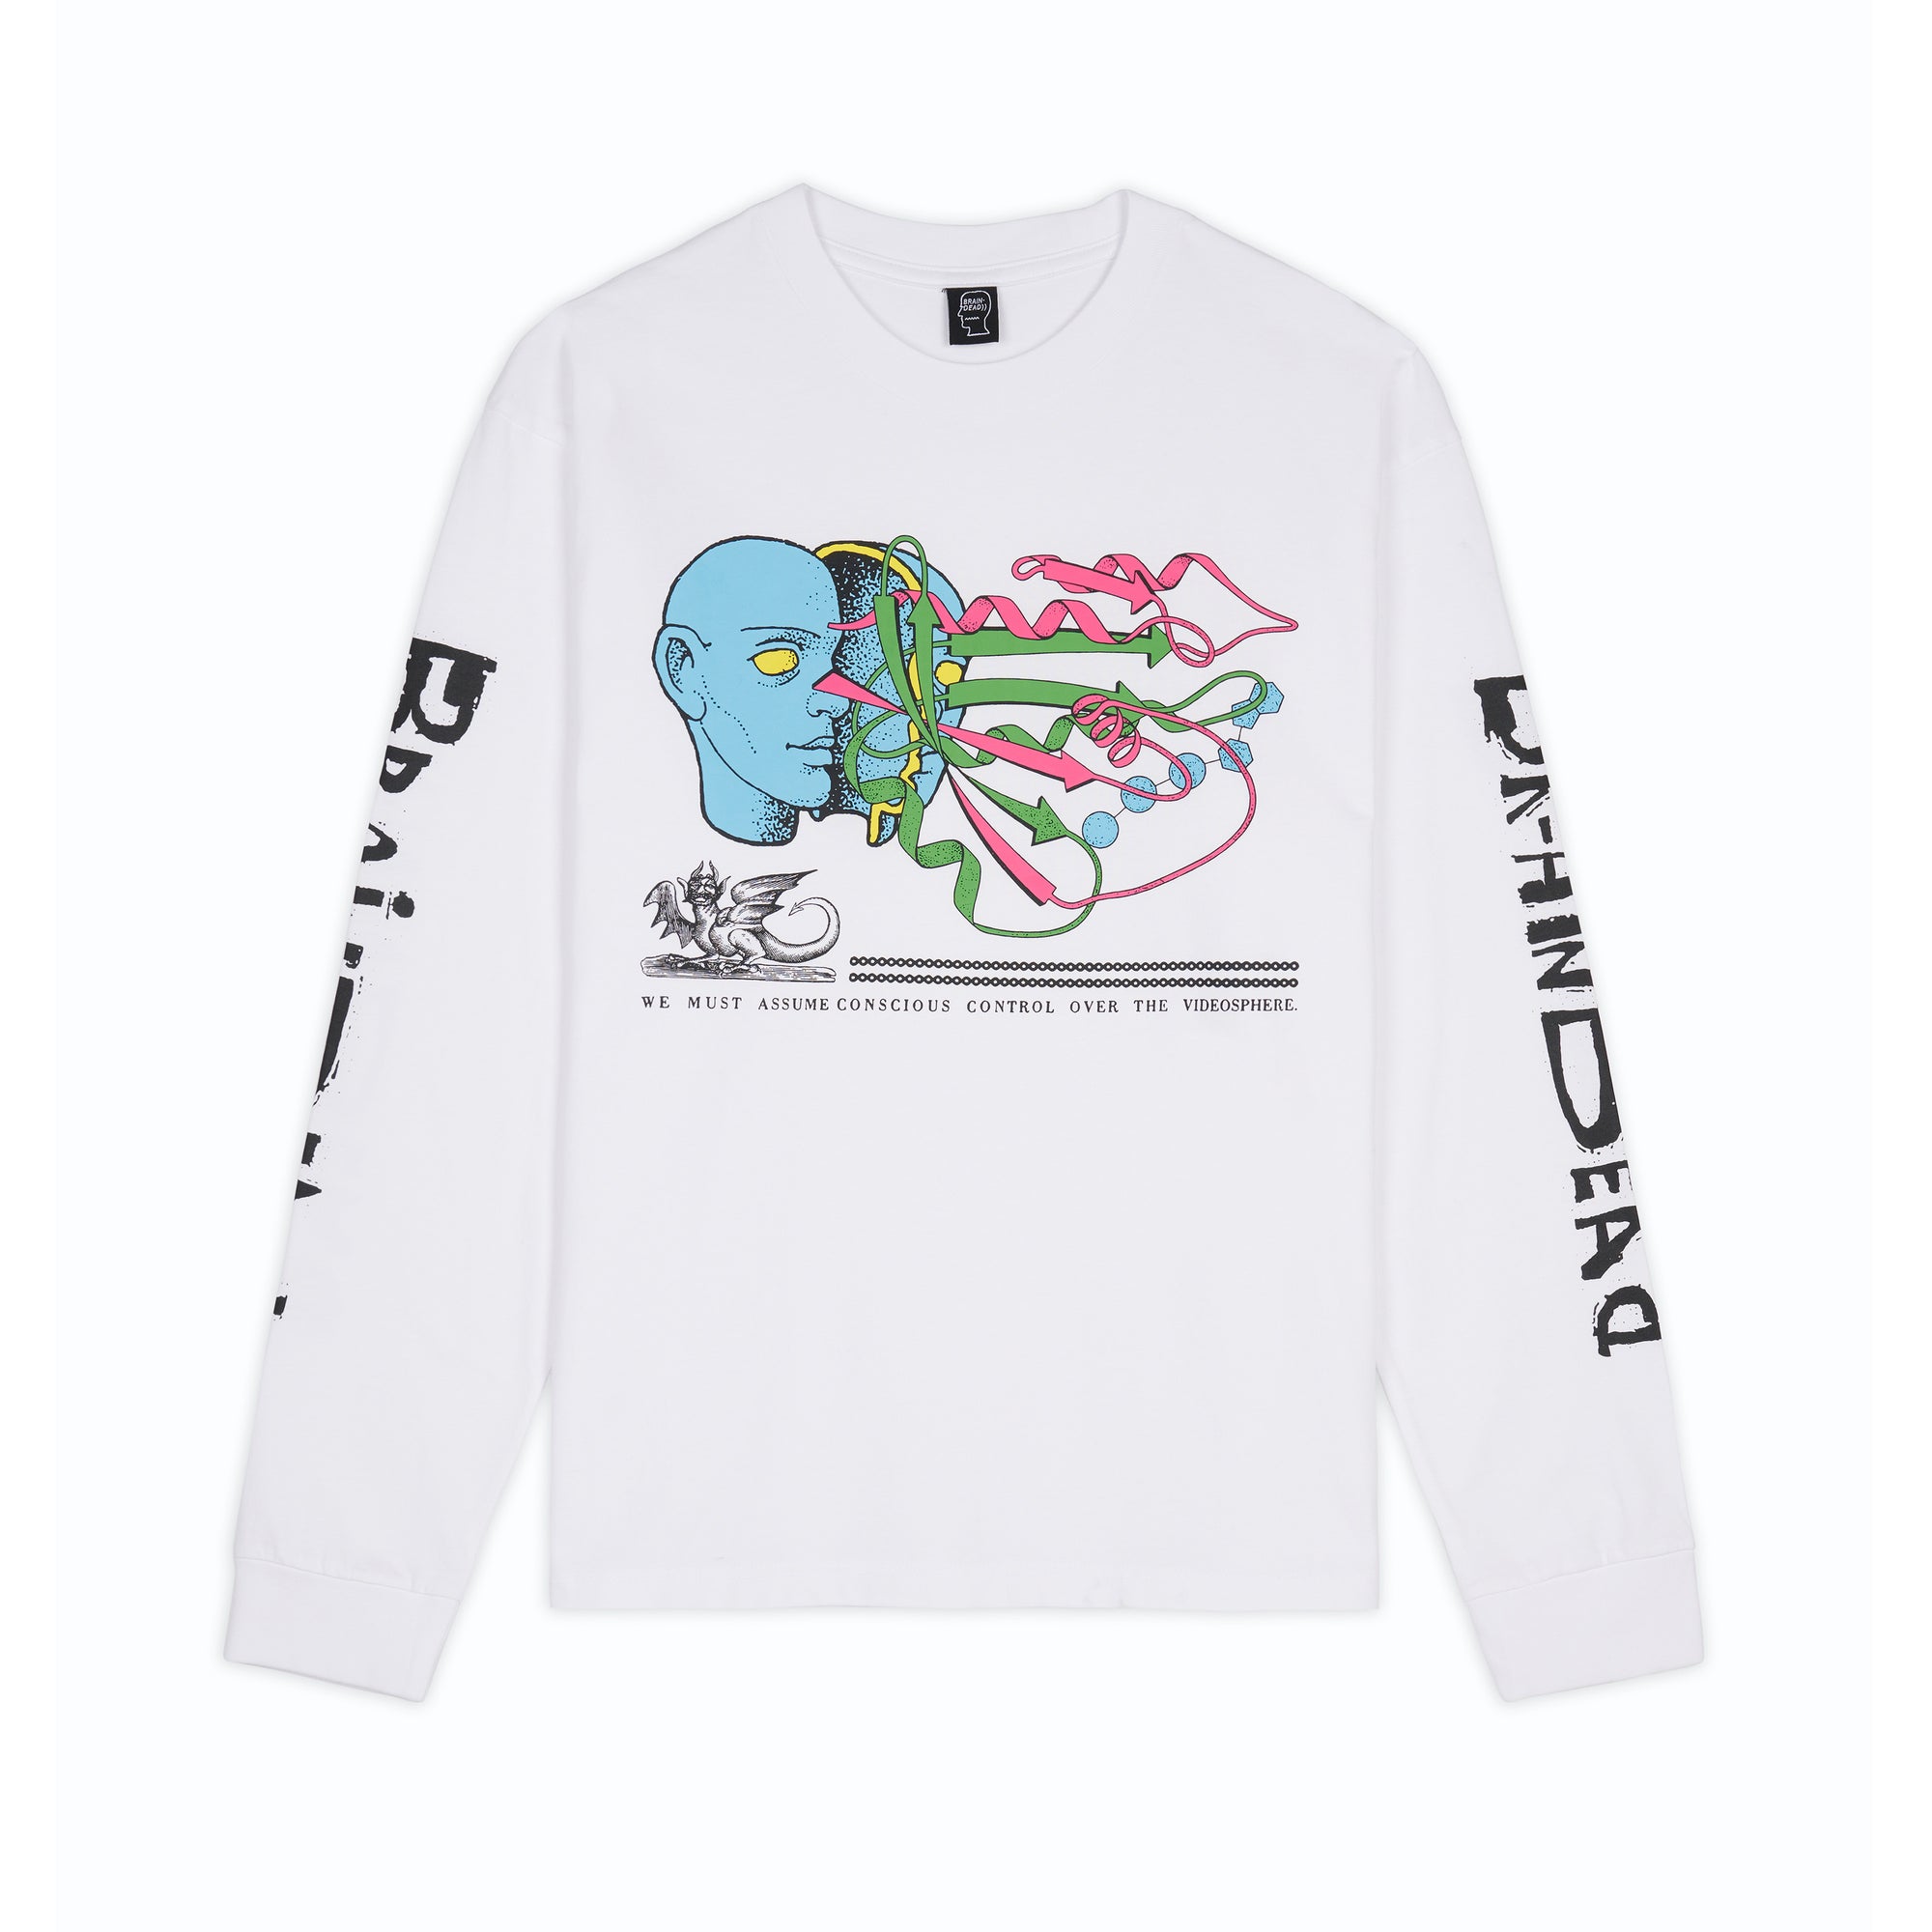 Brain Dead - Men's Conscious Control Long Sleeve T-Shirt - (White) view 1